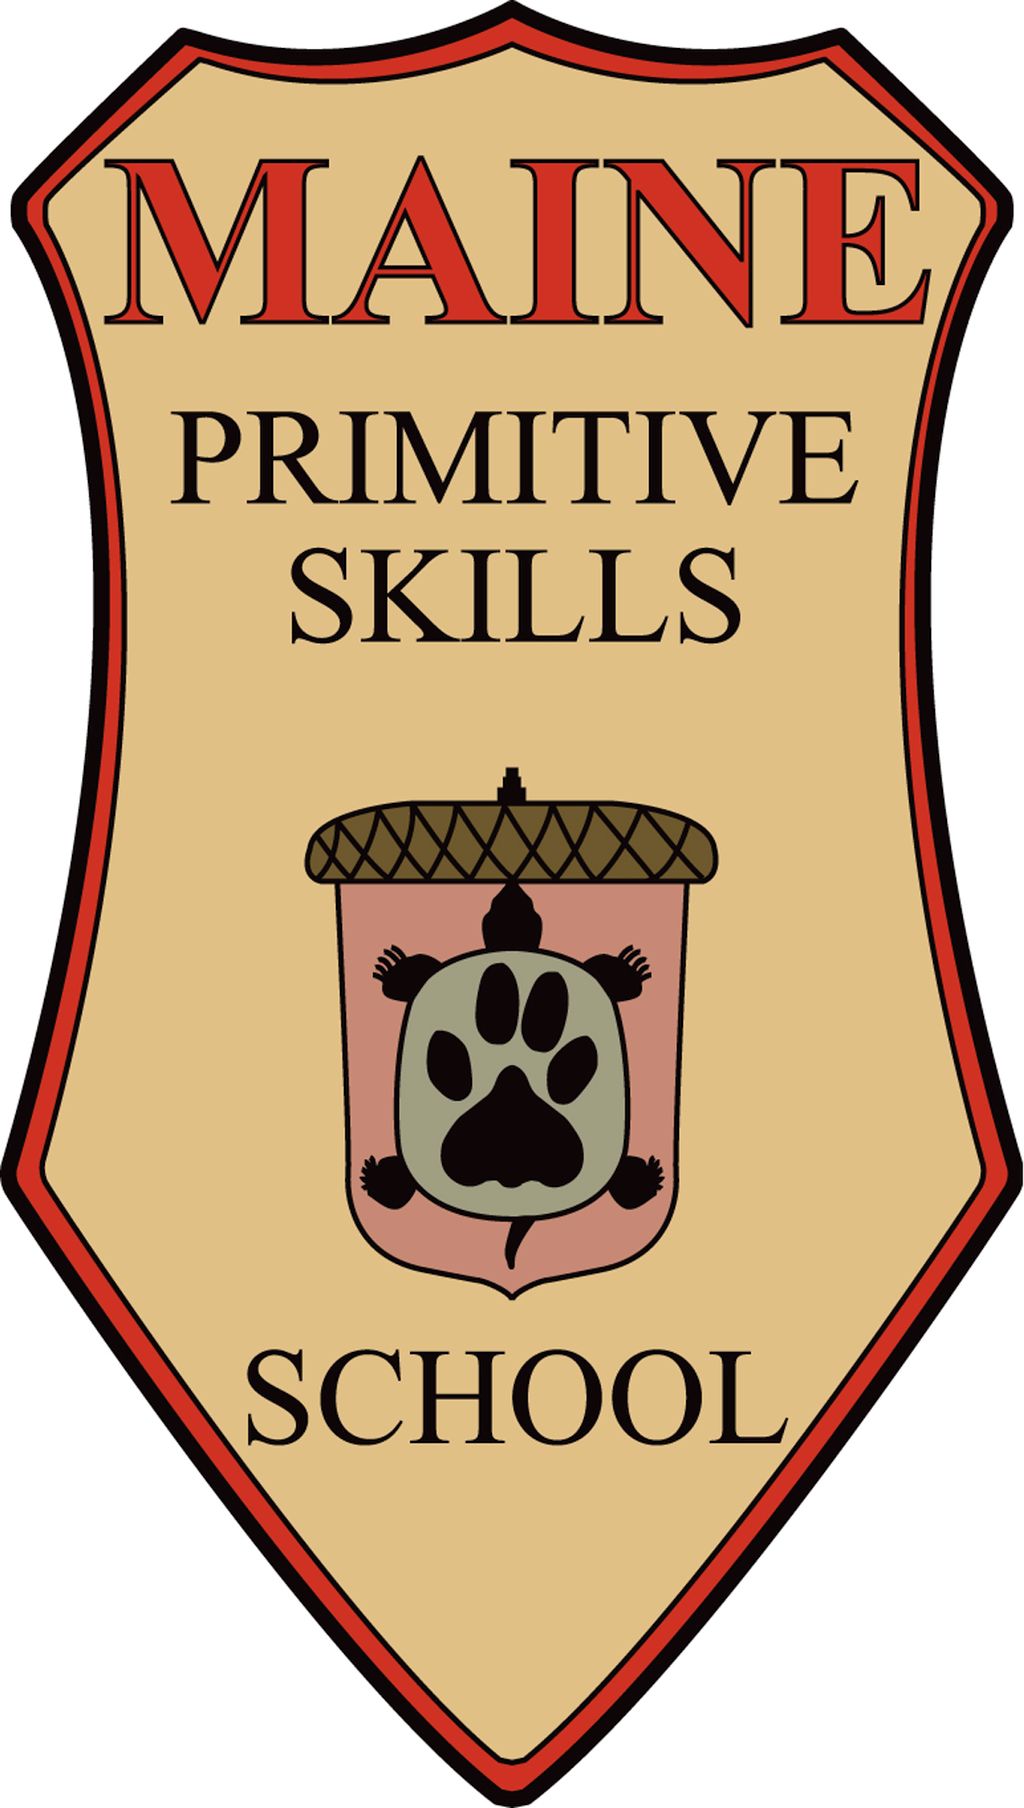 Maine Primitive Skills School